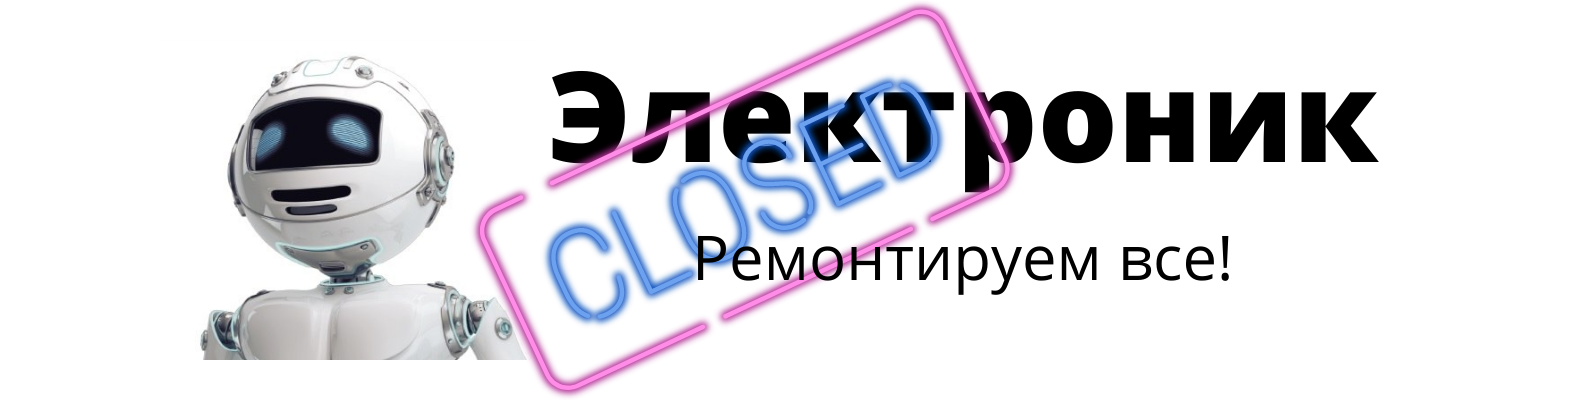 closed_logo